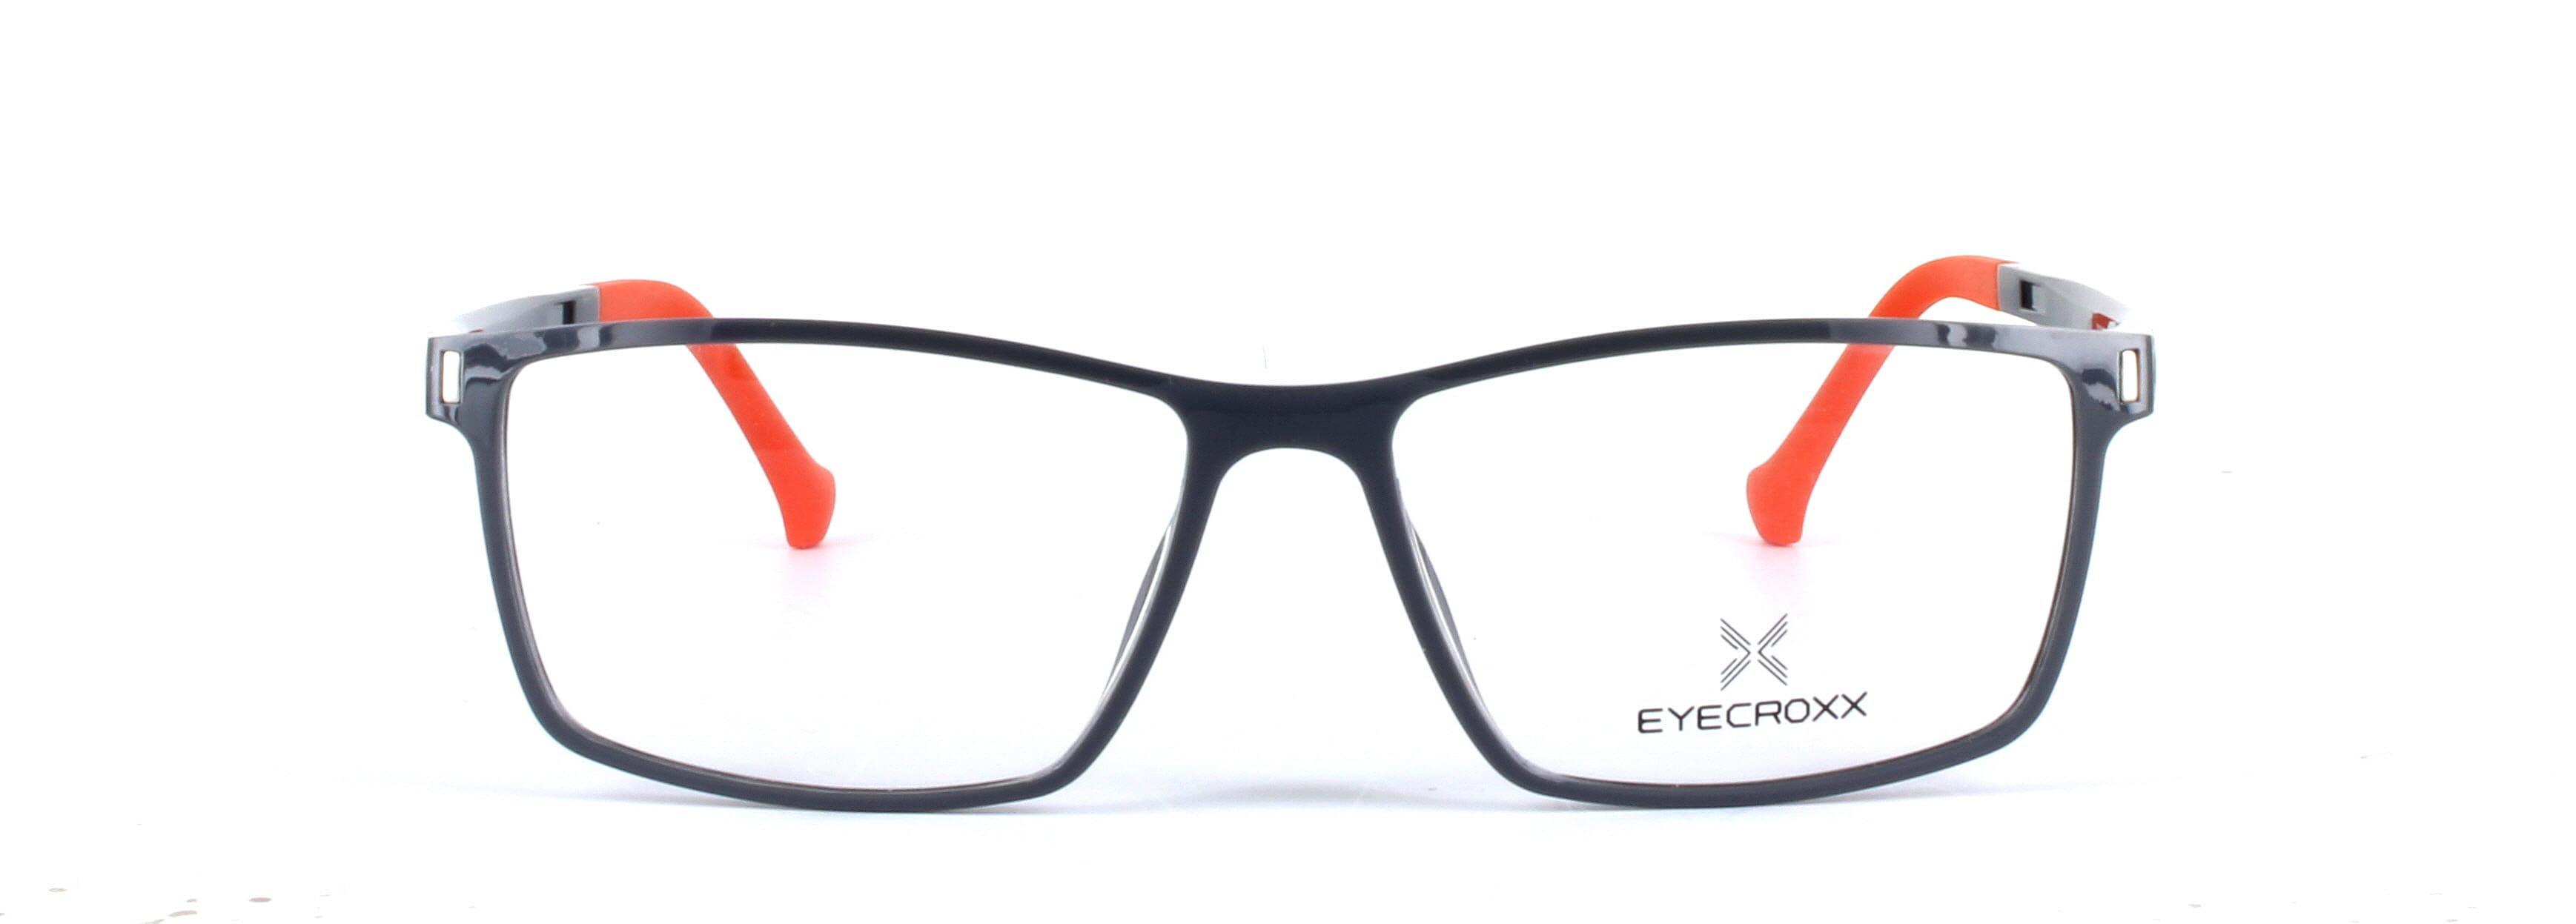 Eyecroxx 587-C4 Grey and Orange Full Rim Rectangular Plastic Glasses - Image View 5